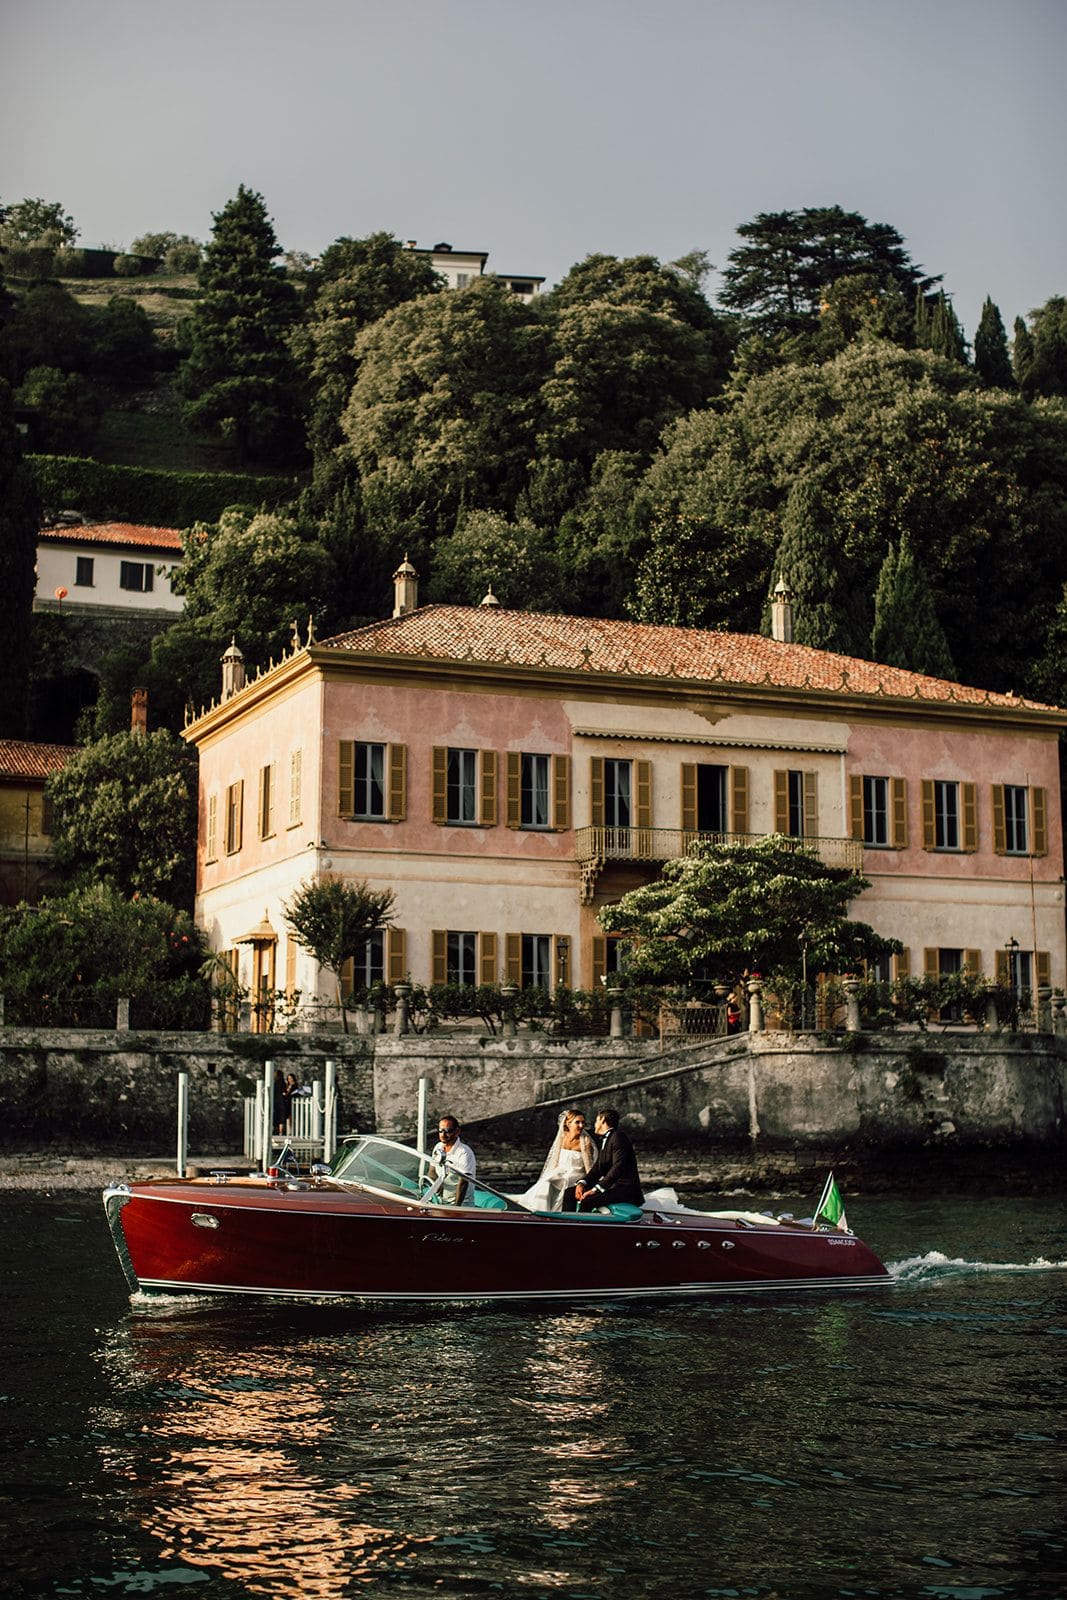 Villa Pizzo, a top Lake Como wedding venue, as seen by boat